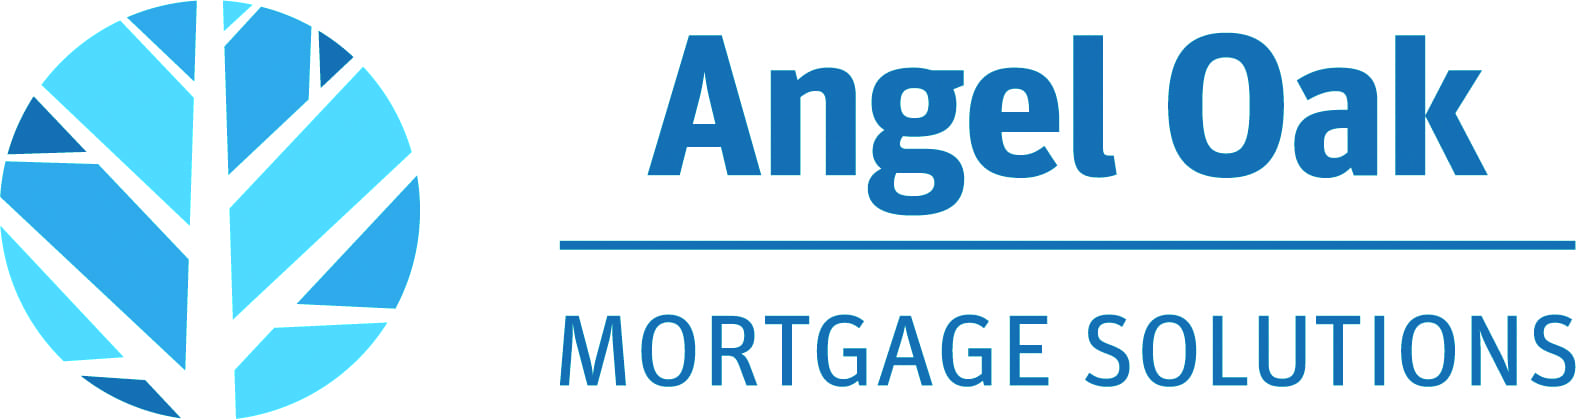 Carrington Mortgage Services Wholesale